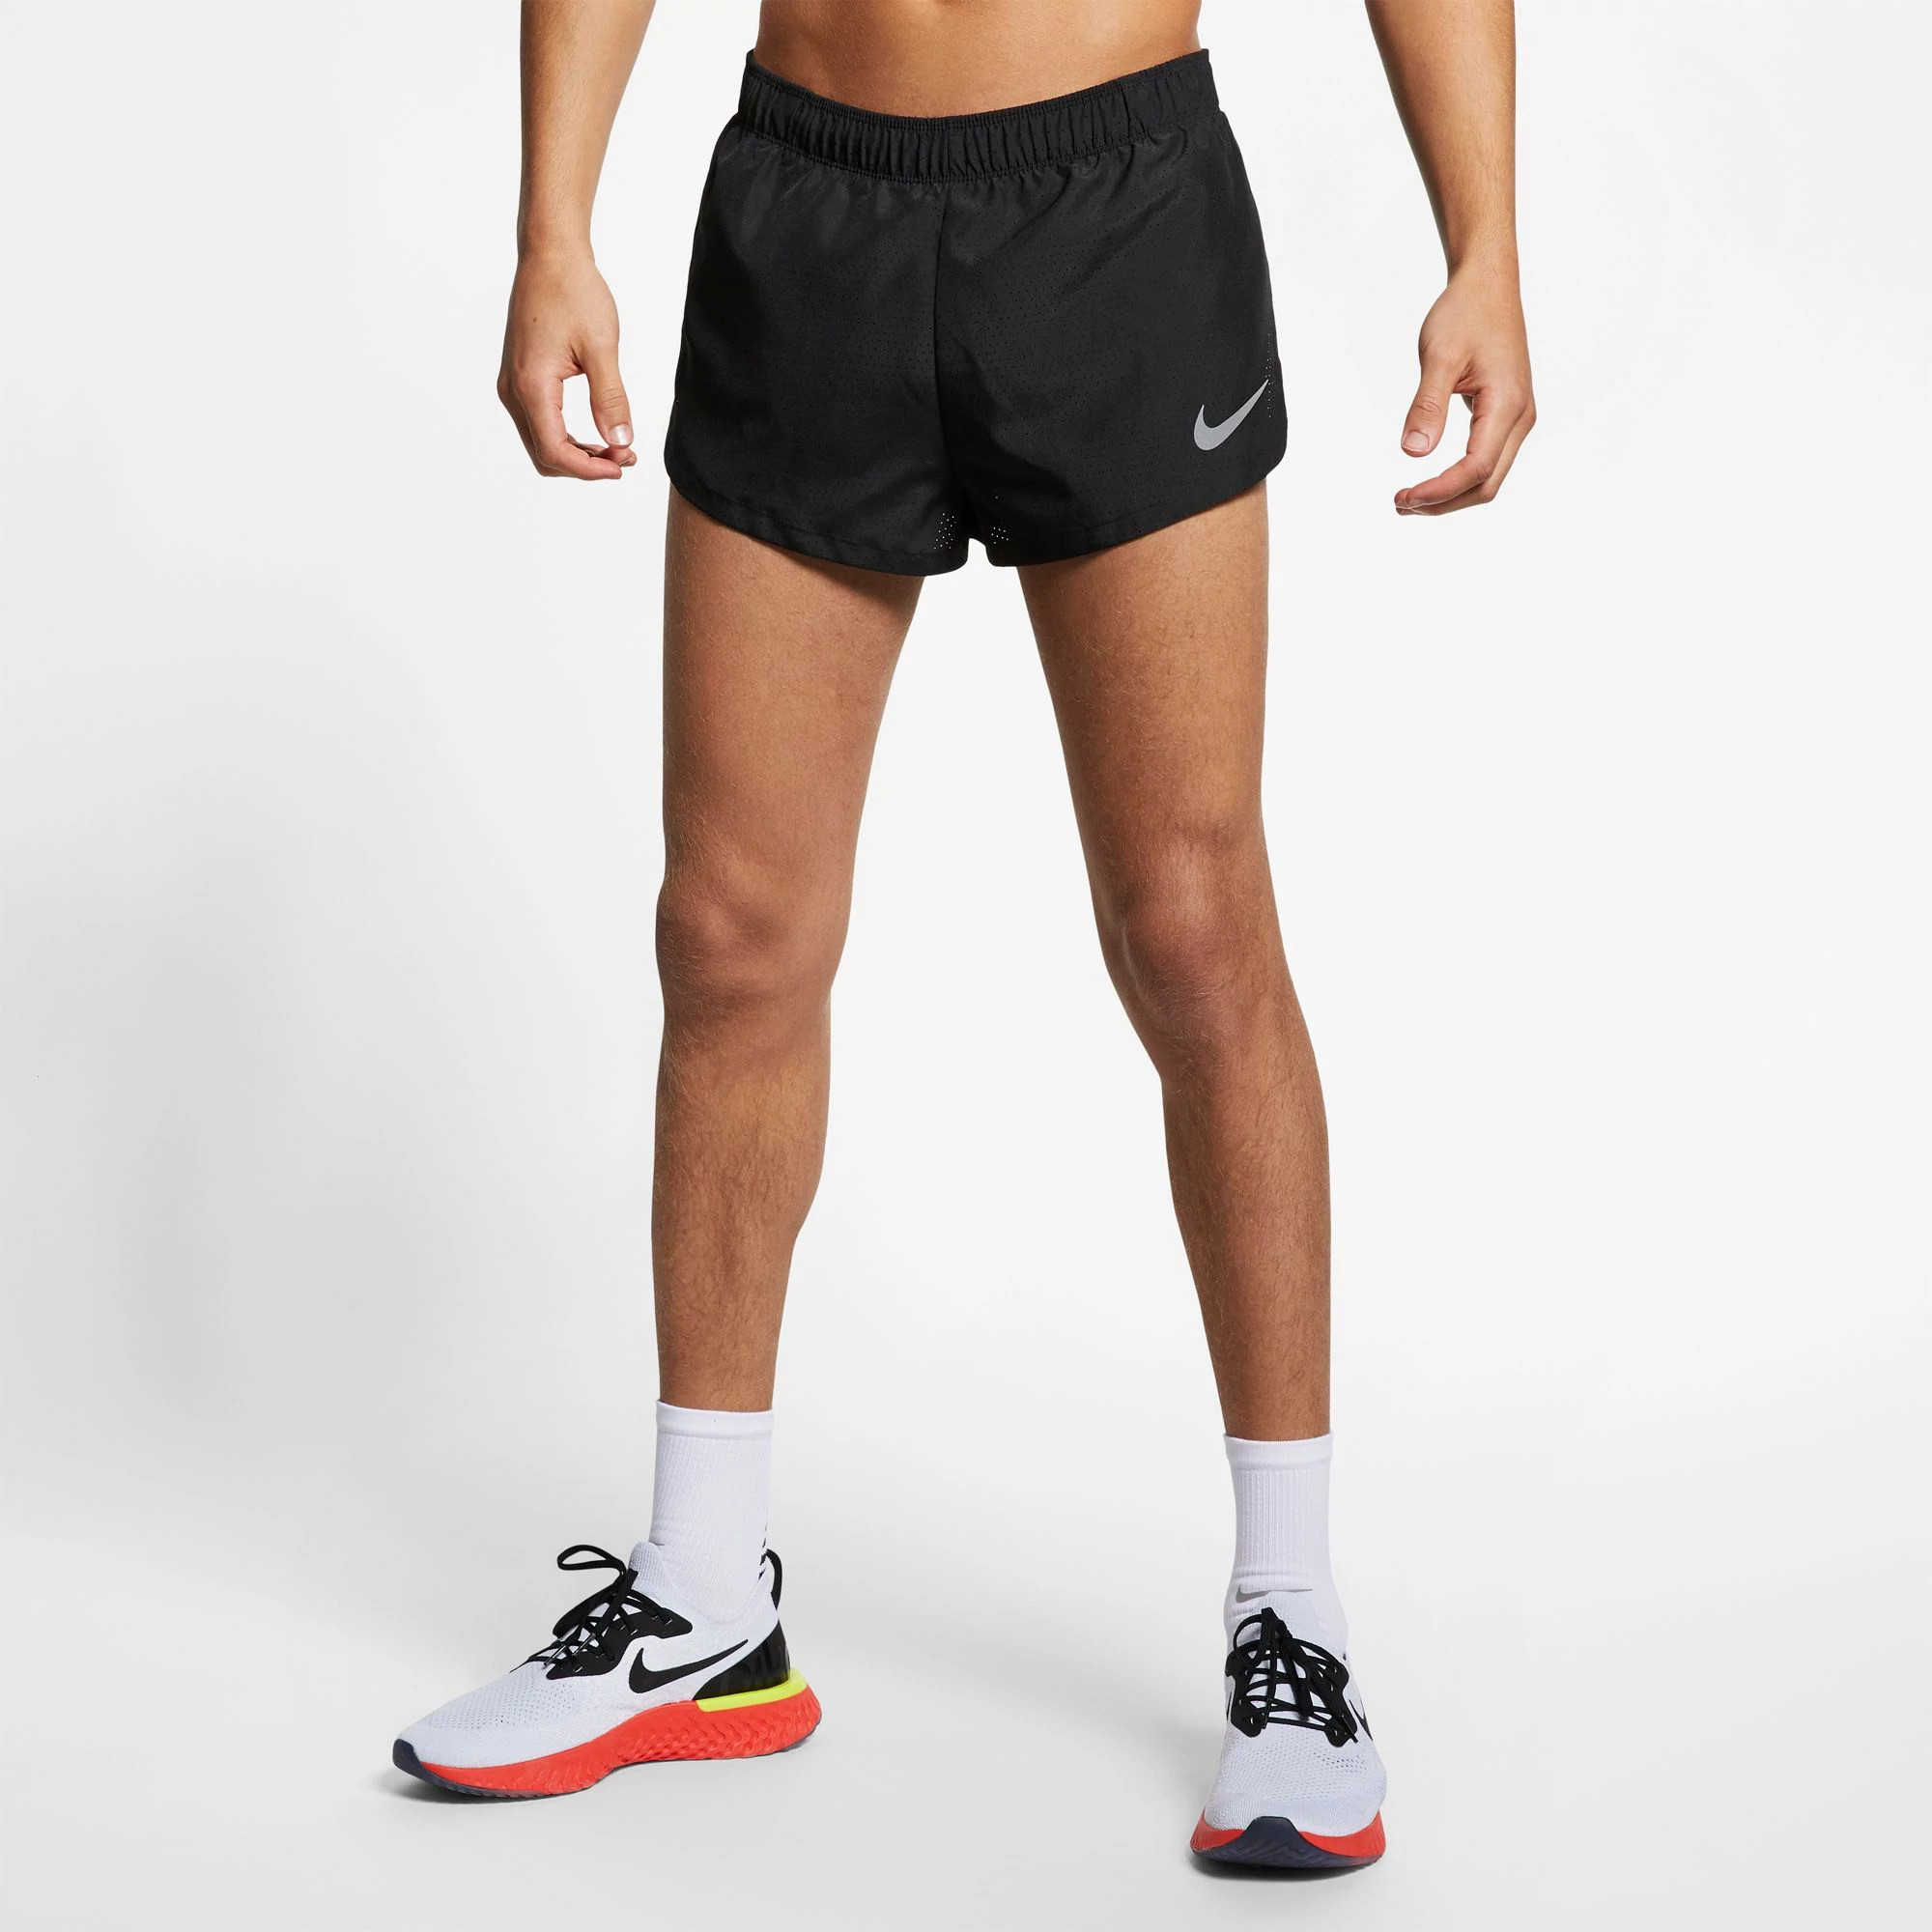 Шорты run. Nike AEROSWIFT 2inch шорты мужские. Шорты найк Nike Dry. Шорты Nike Dri Fit мужские. Шорты найк fast.